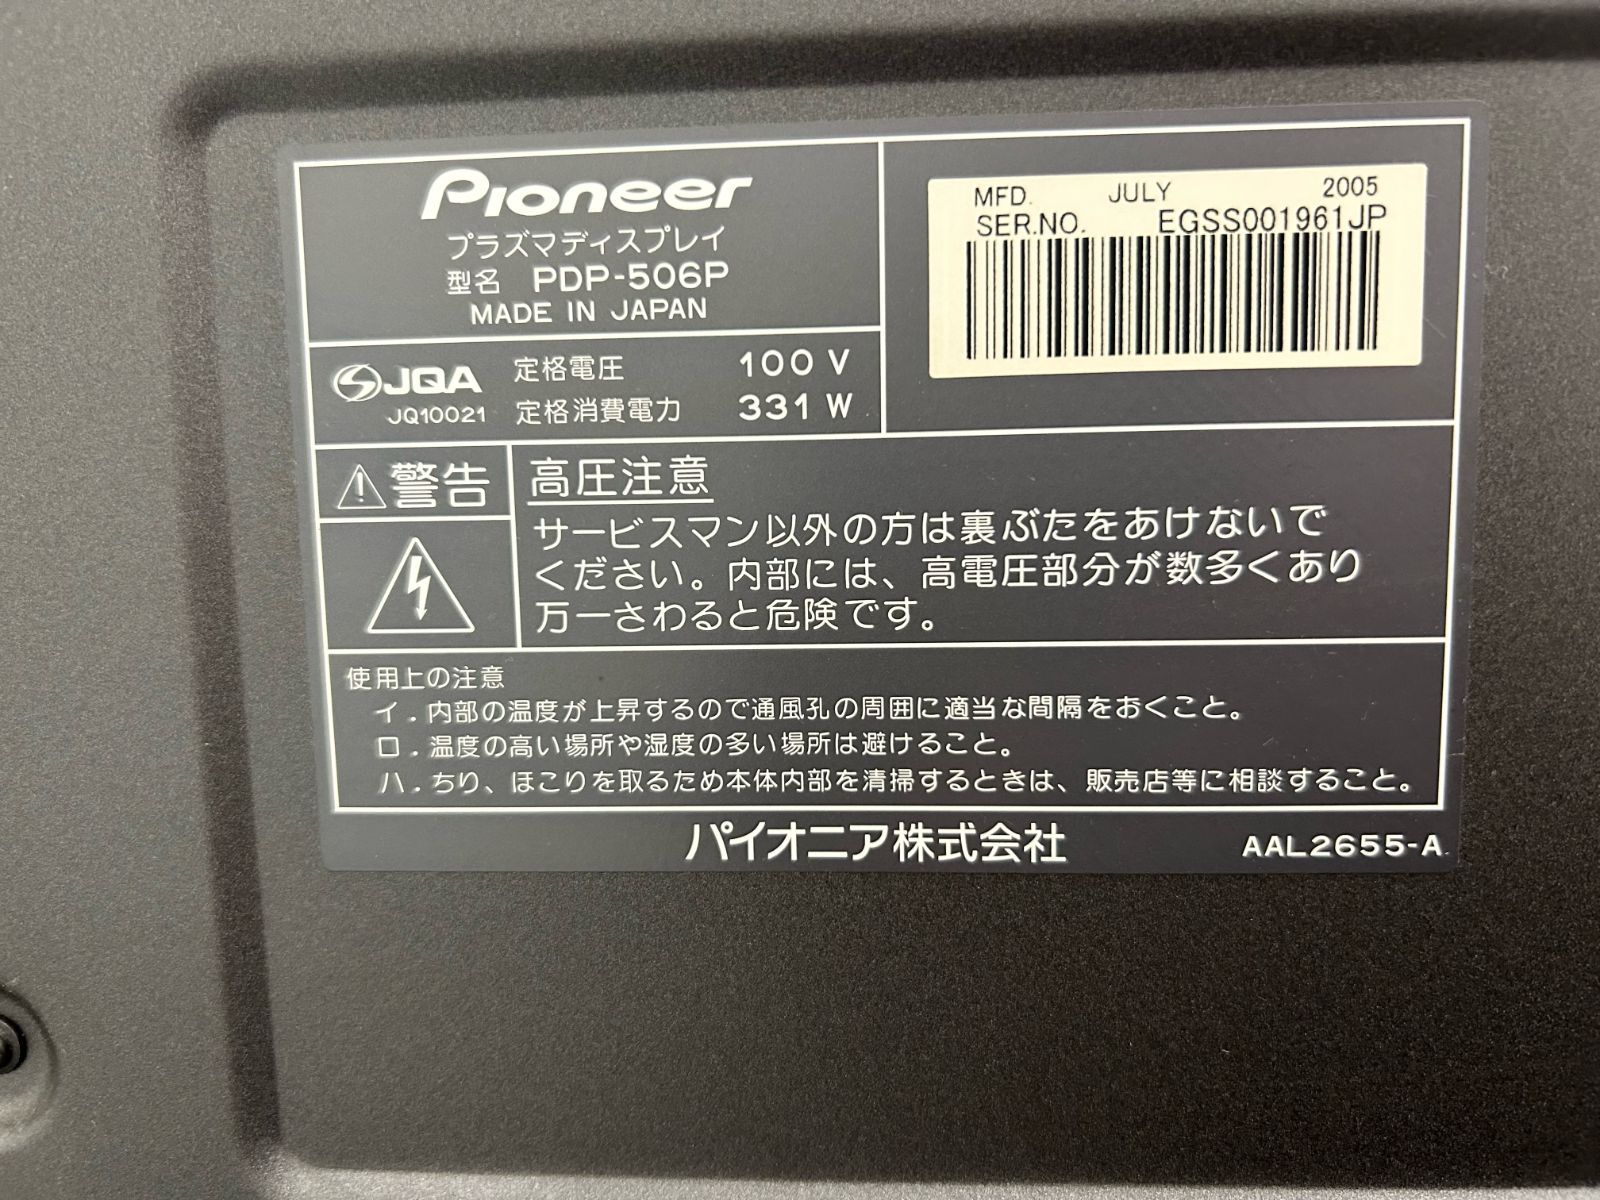 Pioneer】プラズマテレビ☆PDP-506HDL☆50V型☆パイオニア☆B-CAS